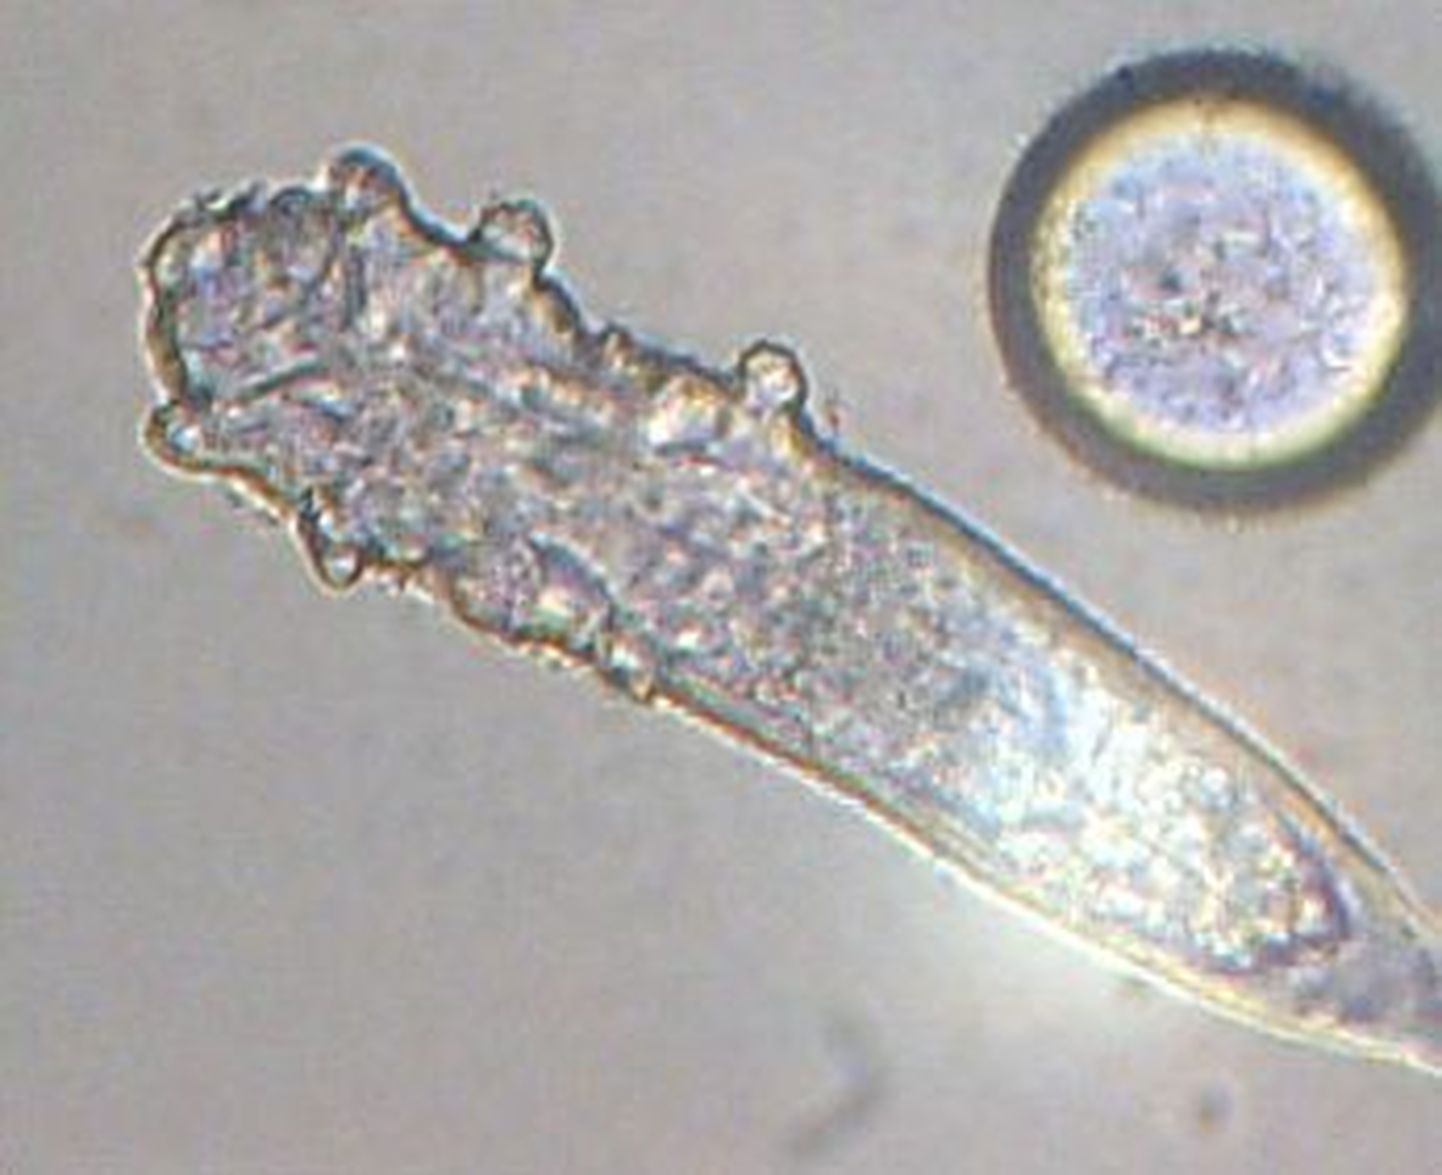 Demodex folliculorum